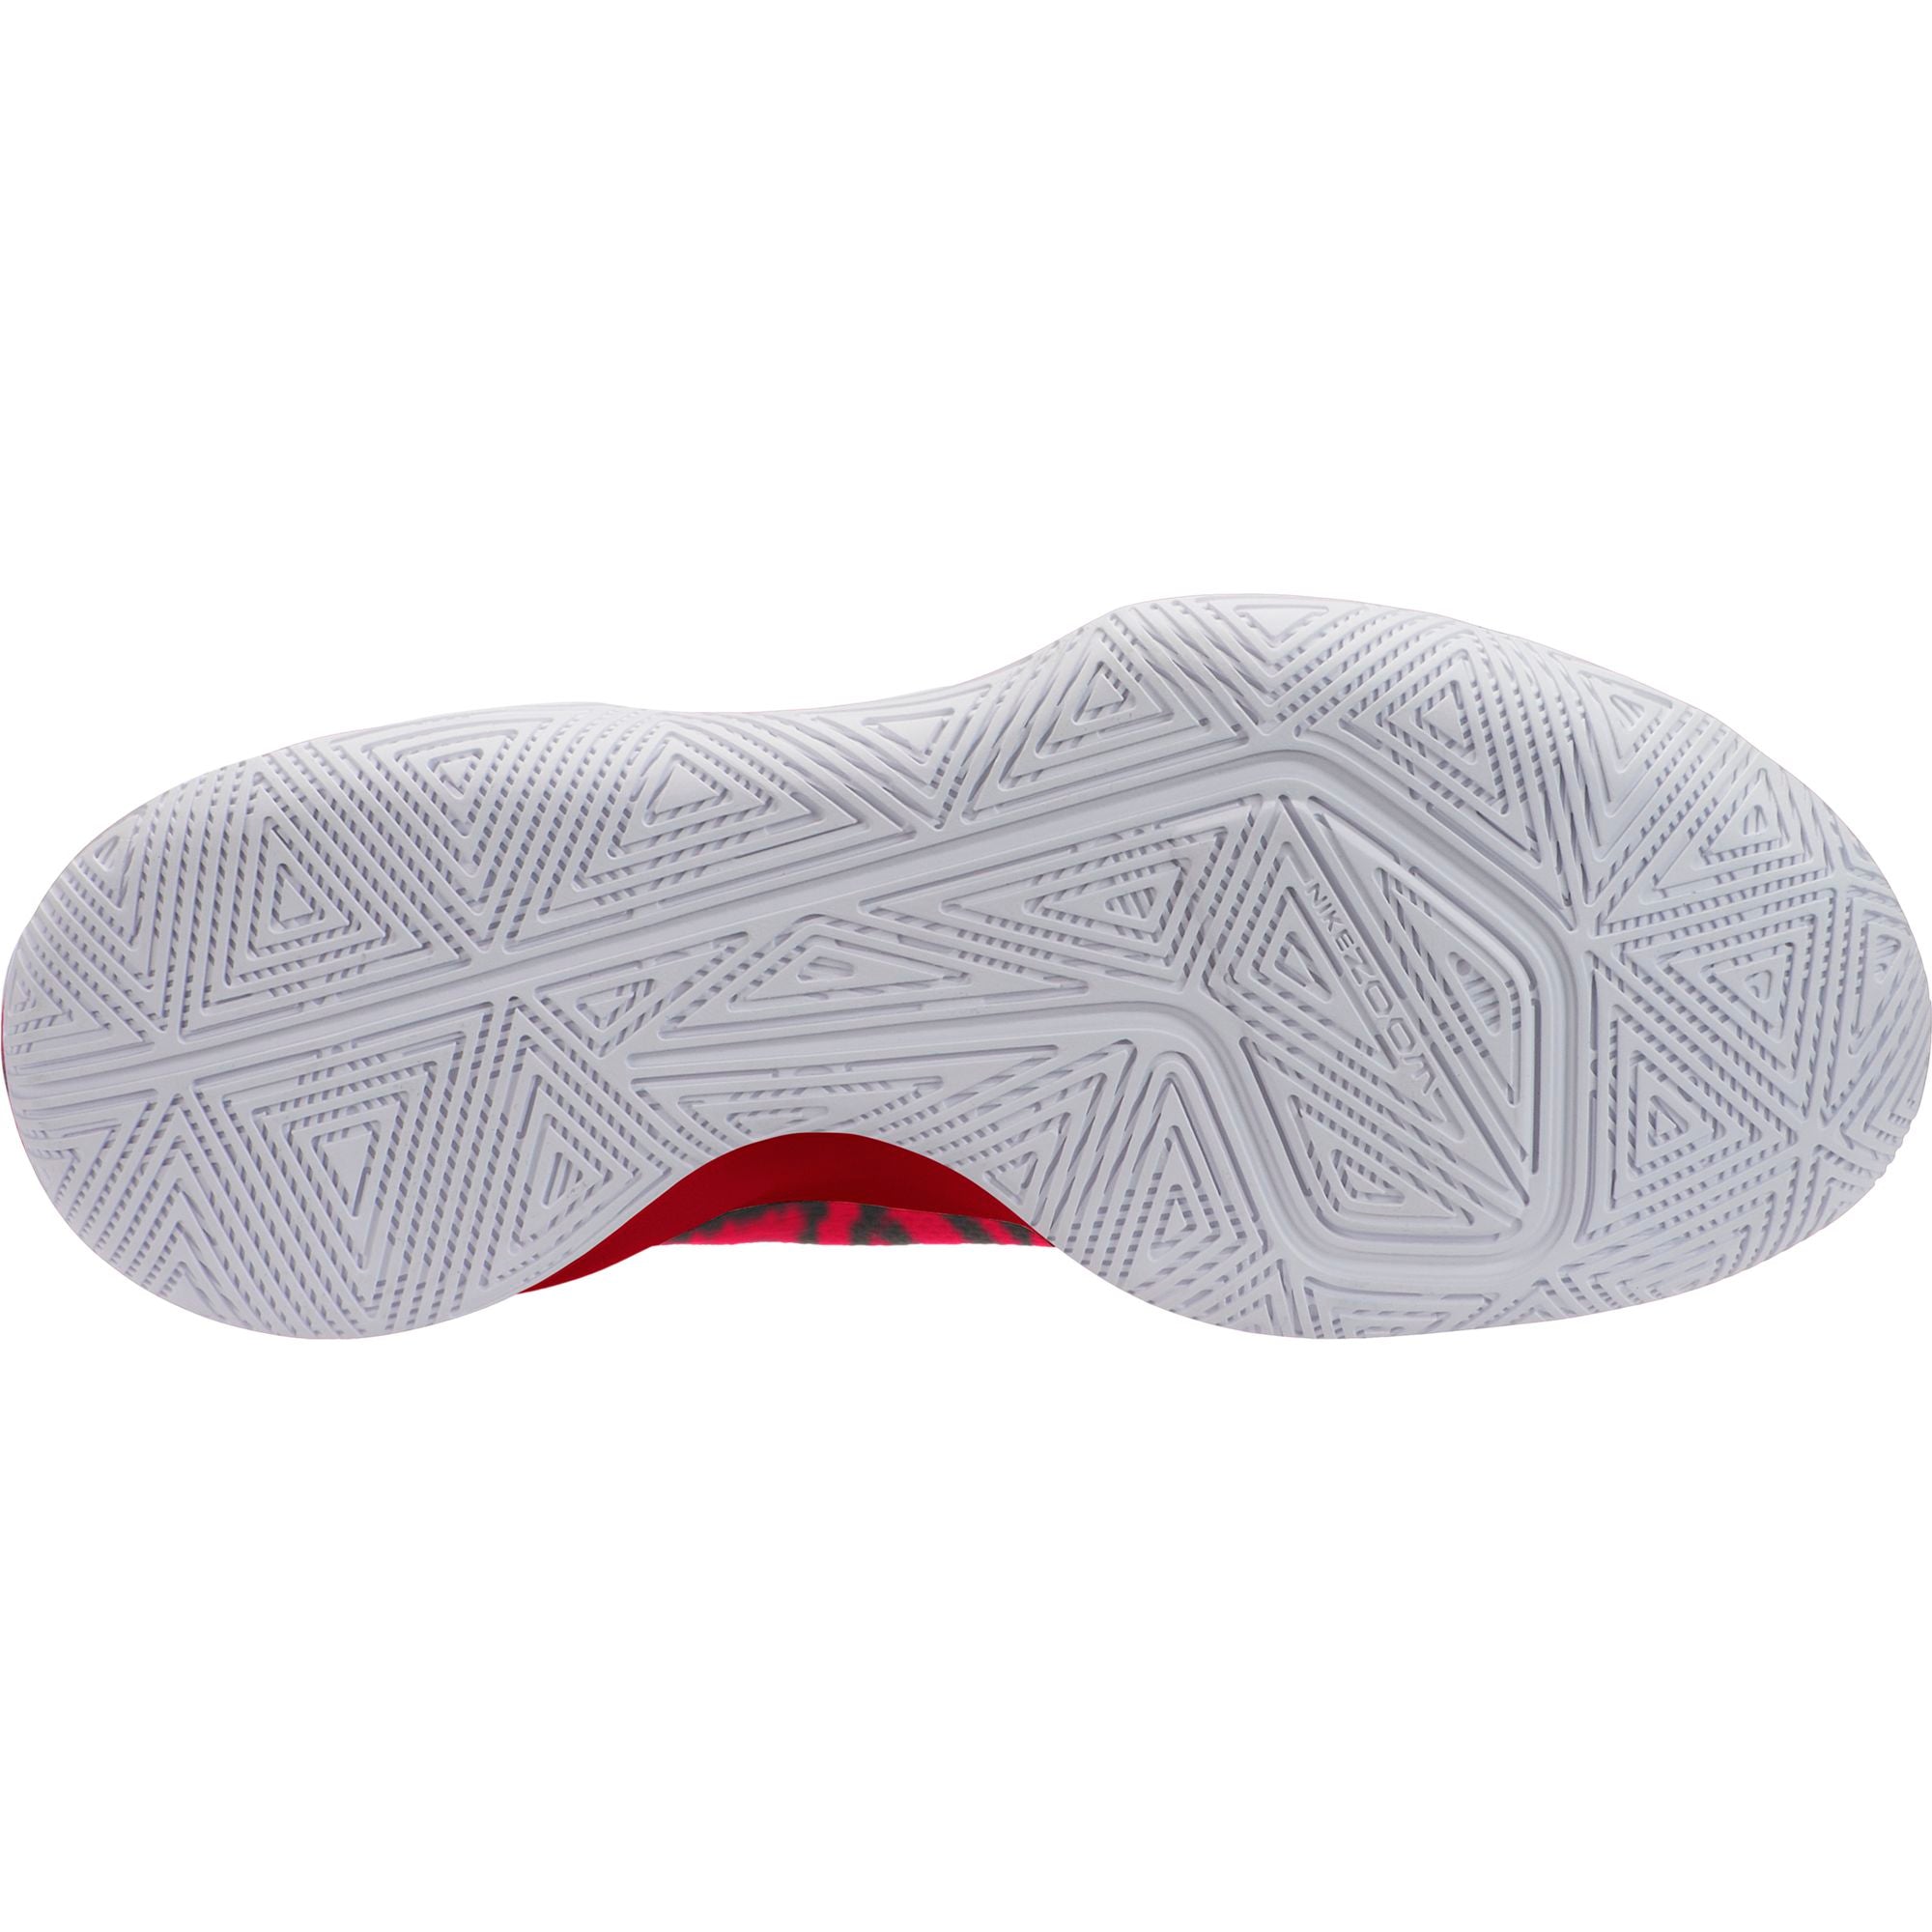 Nike Zoom Evidence III Basketball Boot/Shoe - Black/University Red/White